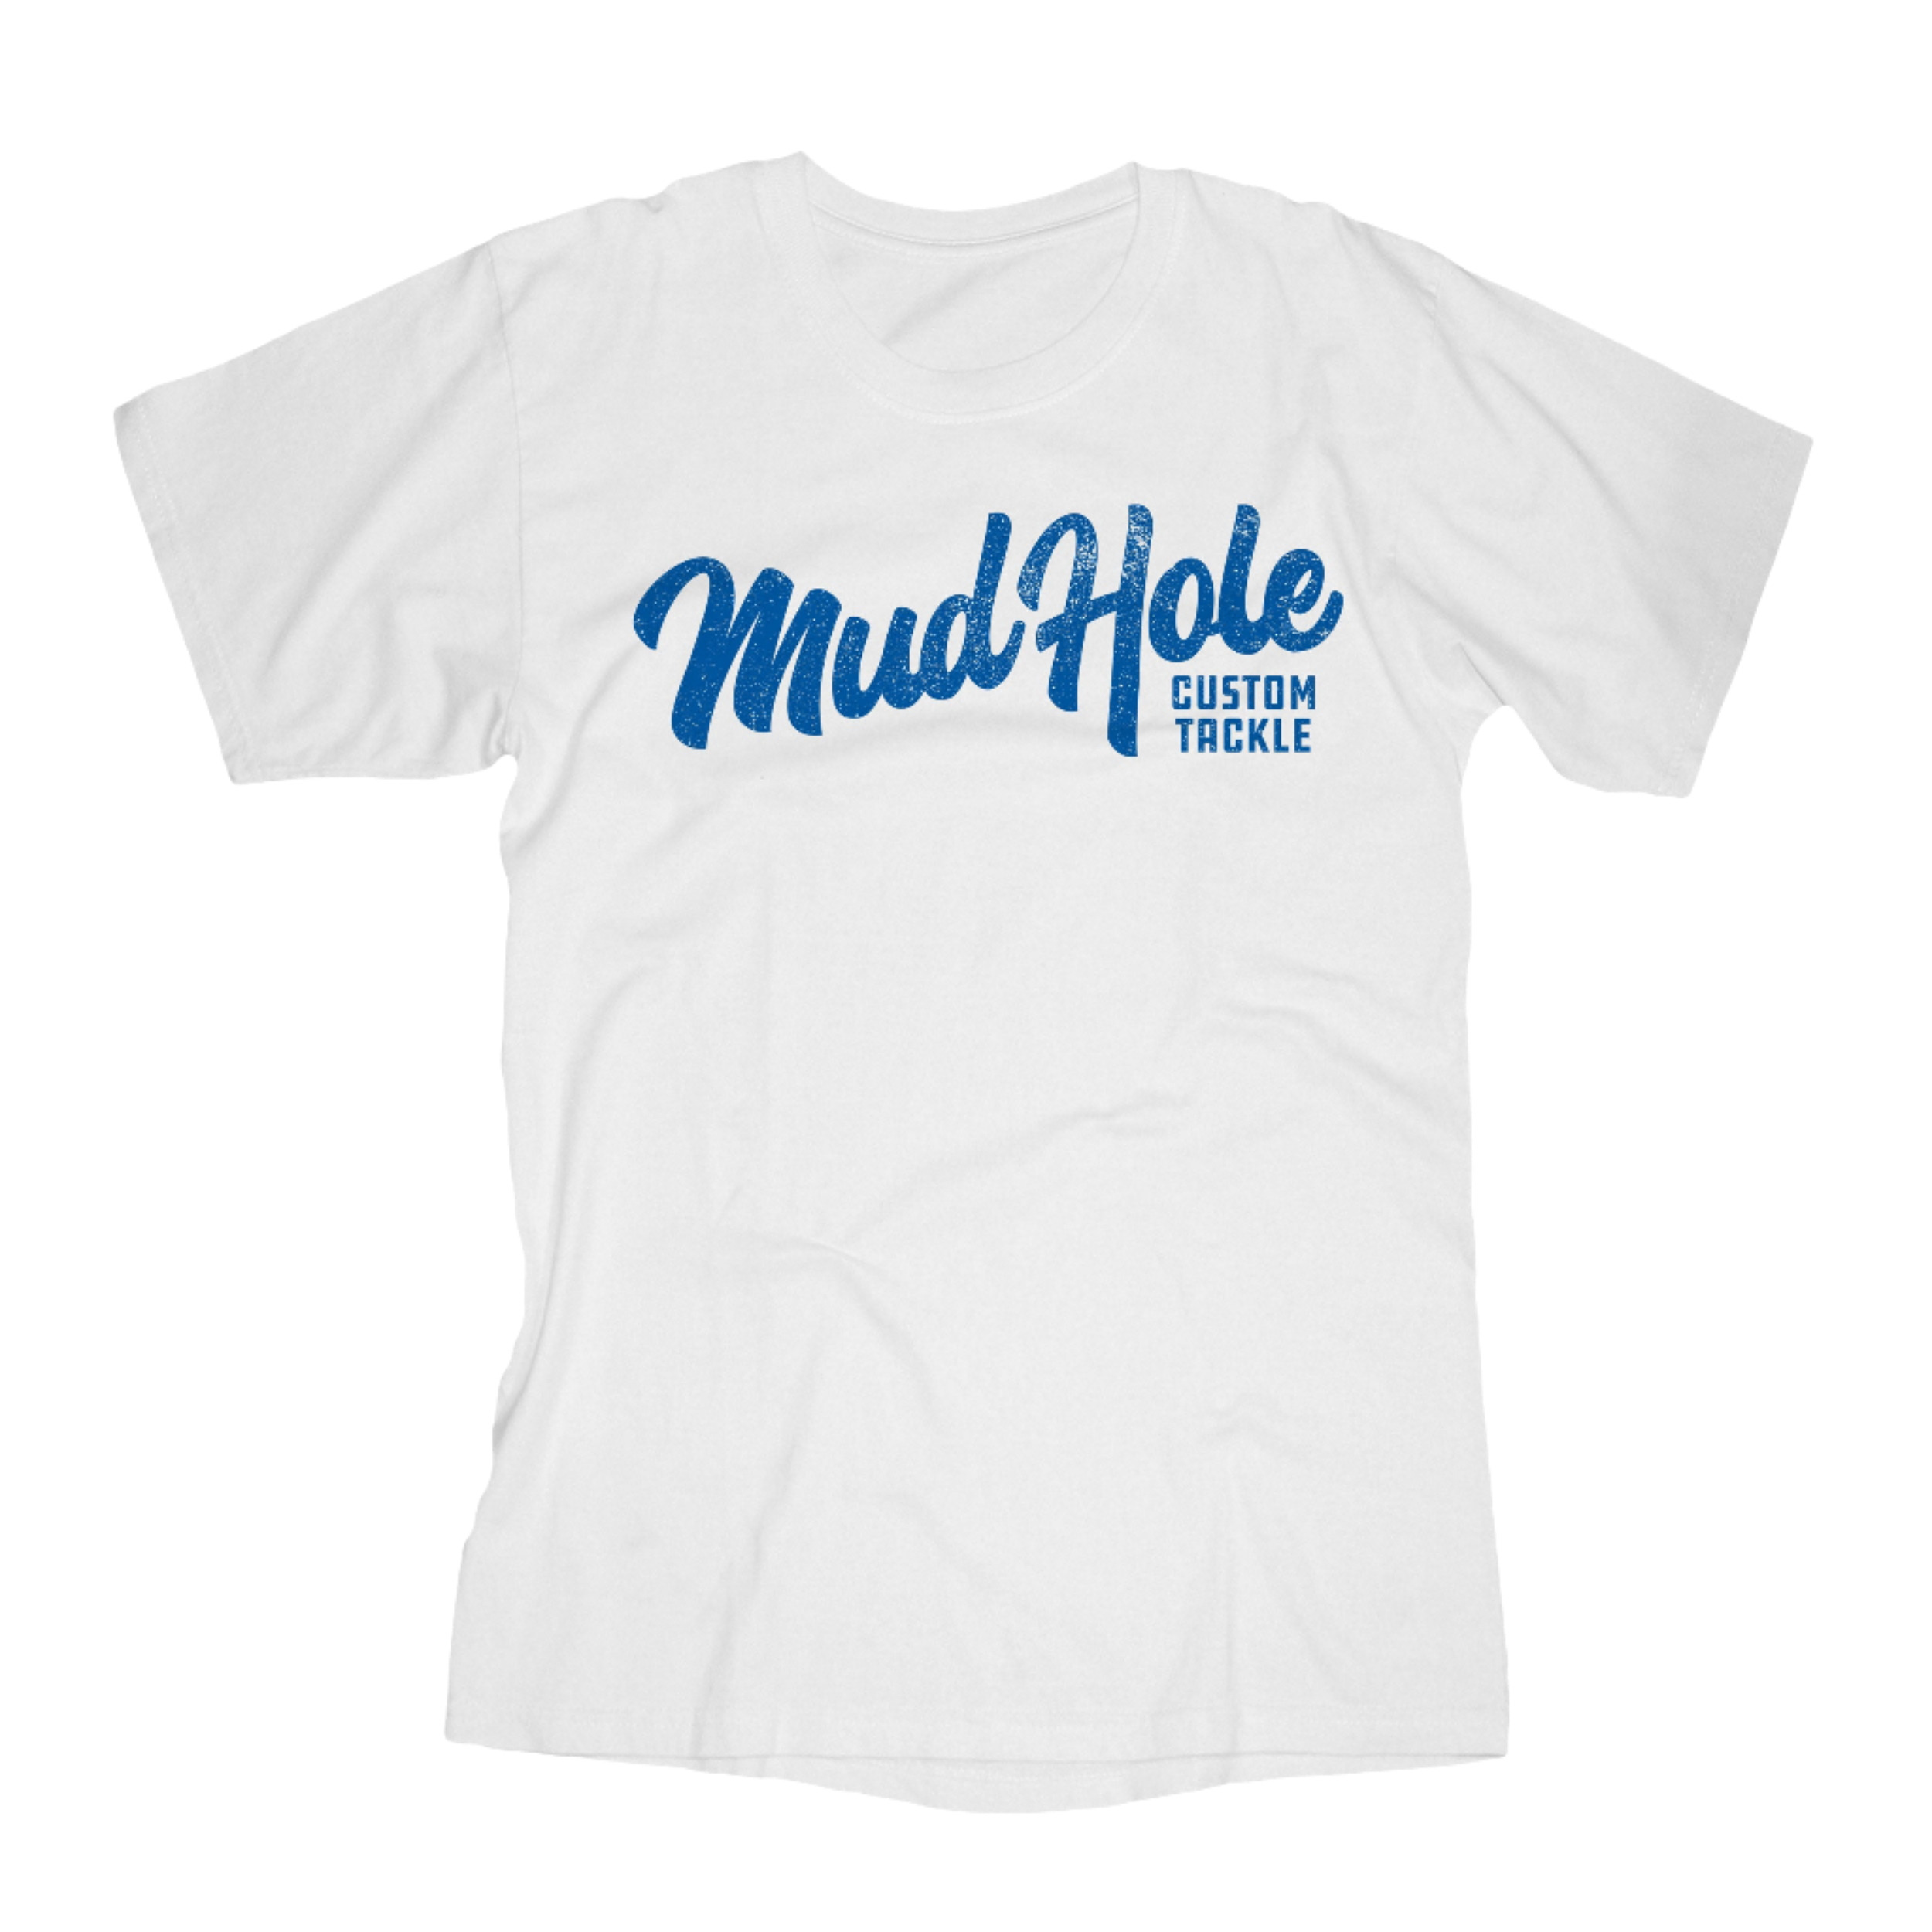 Mud Hole Built Not Bought T-Shirt